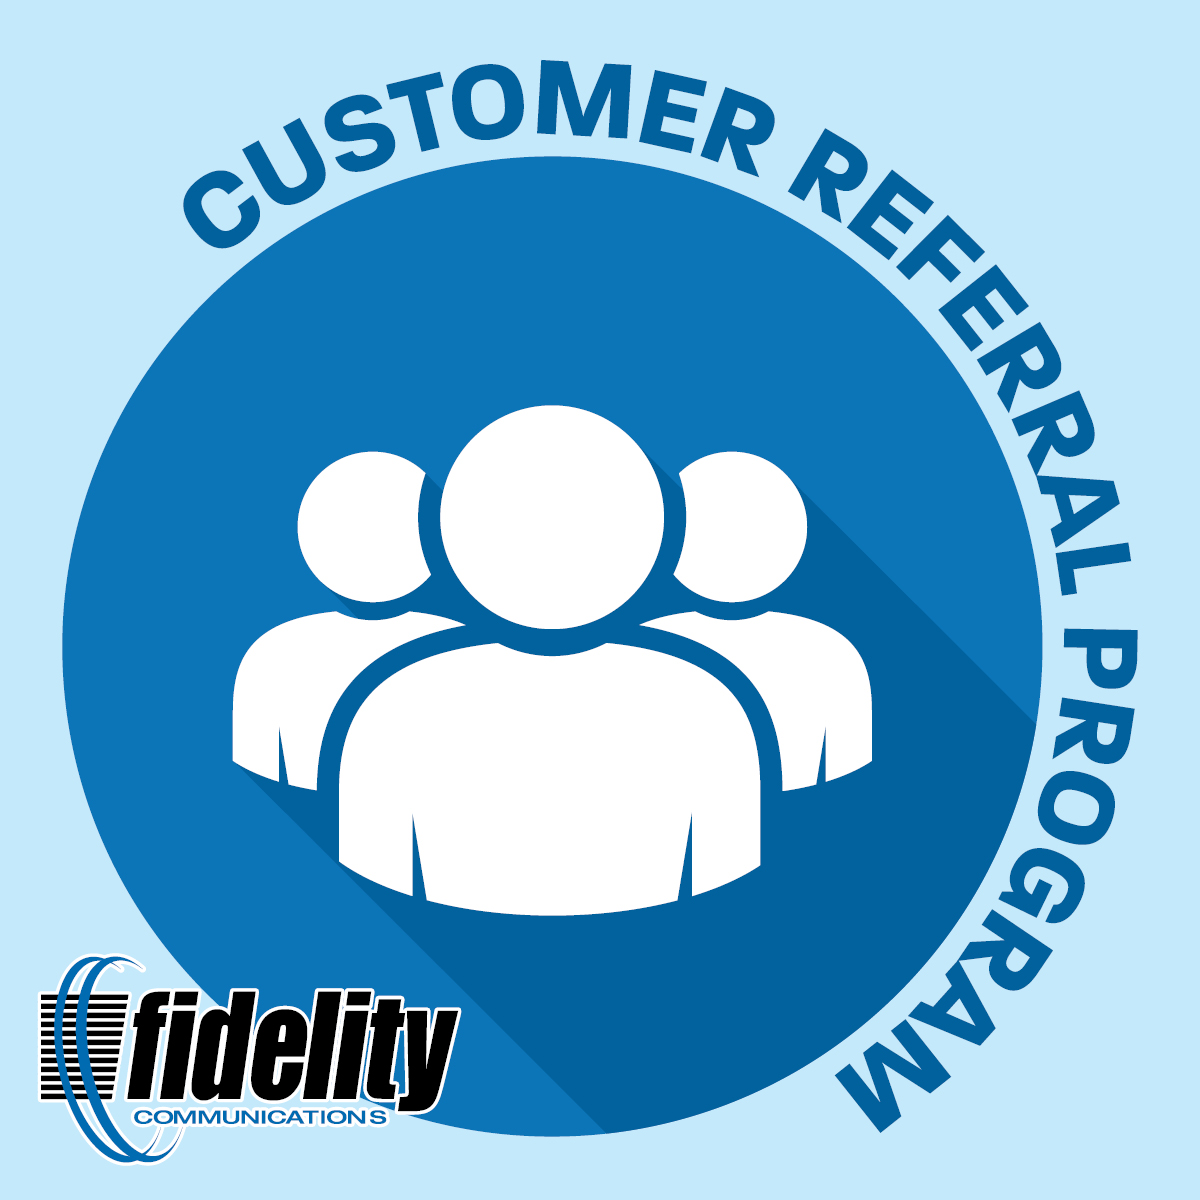 visual says customer referral program